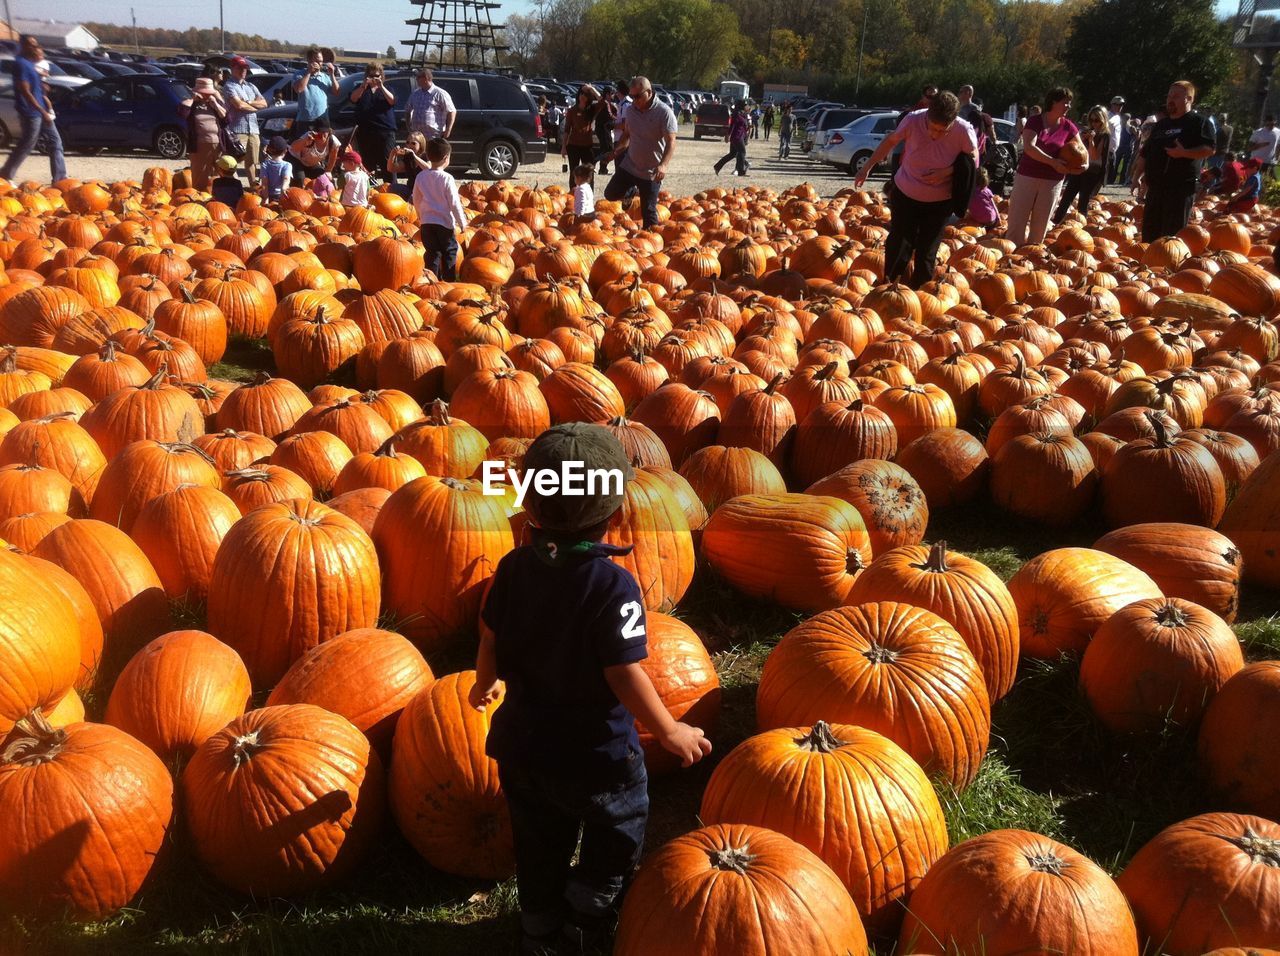 Looking through the sea of autumn pumpkins.